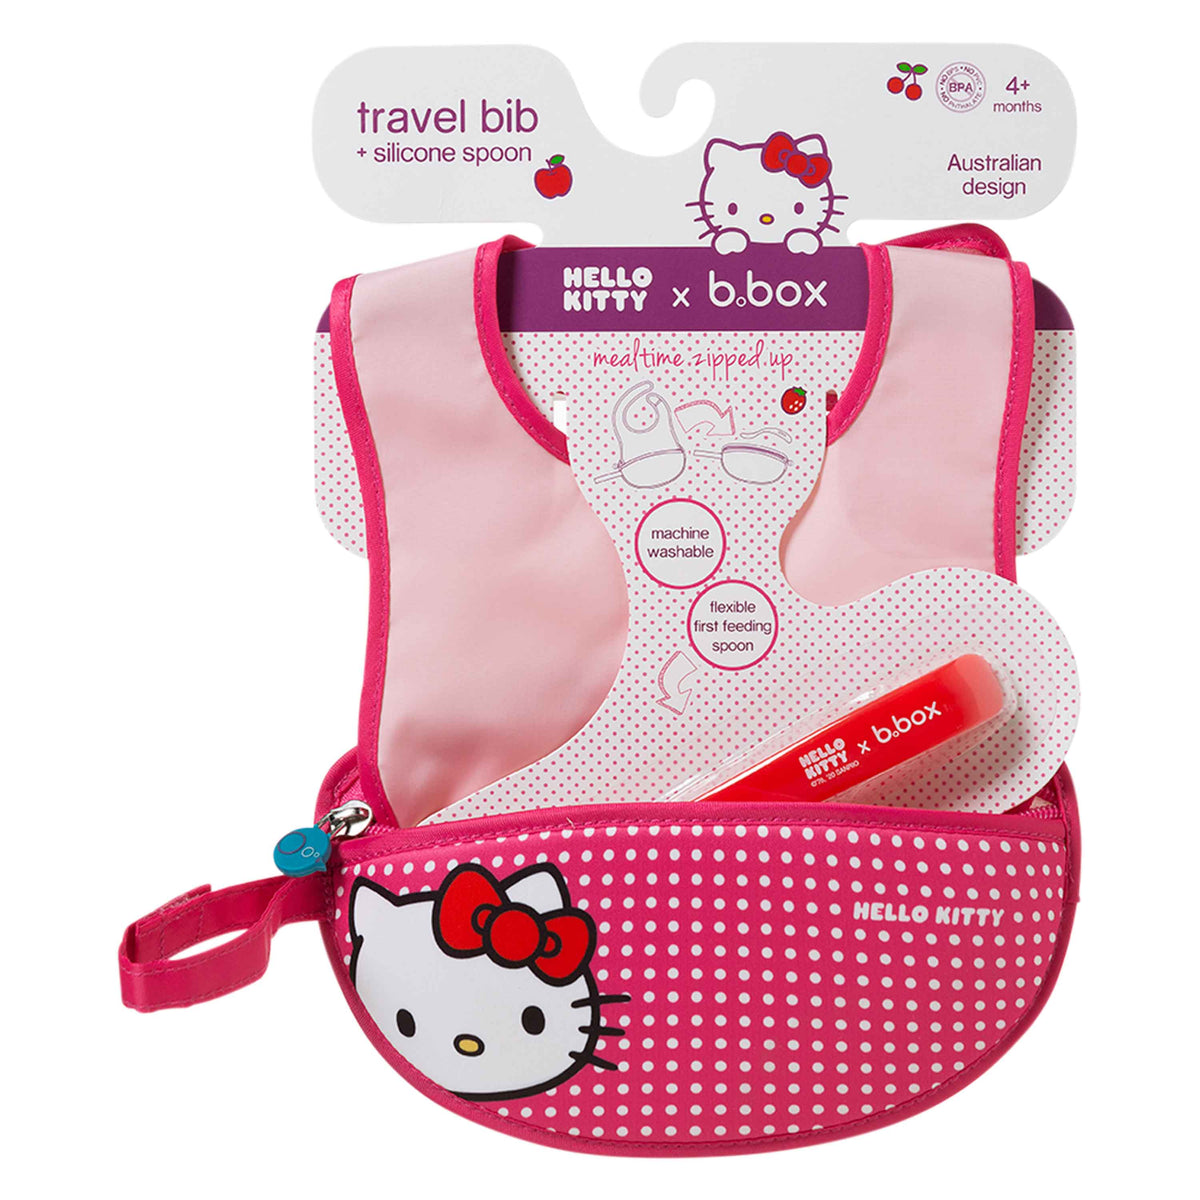 b.box x Hello Kitty Travel Bib with Spoon - Pop Star